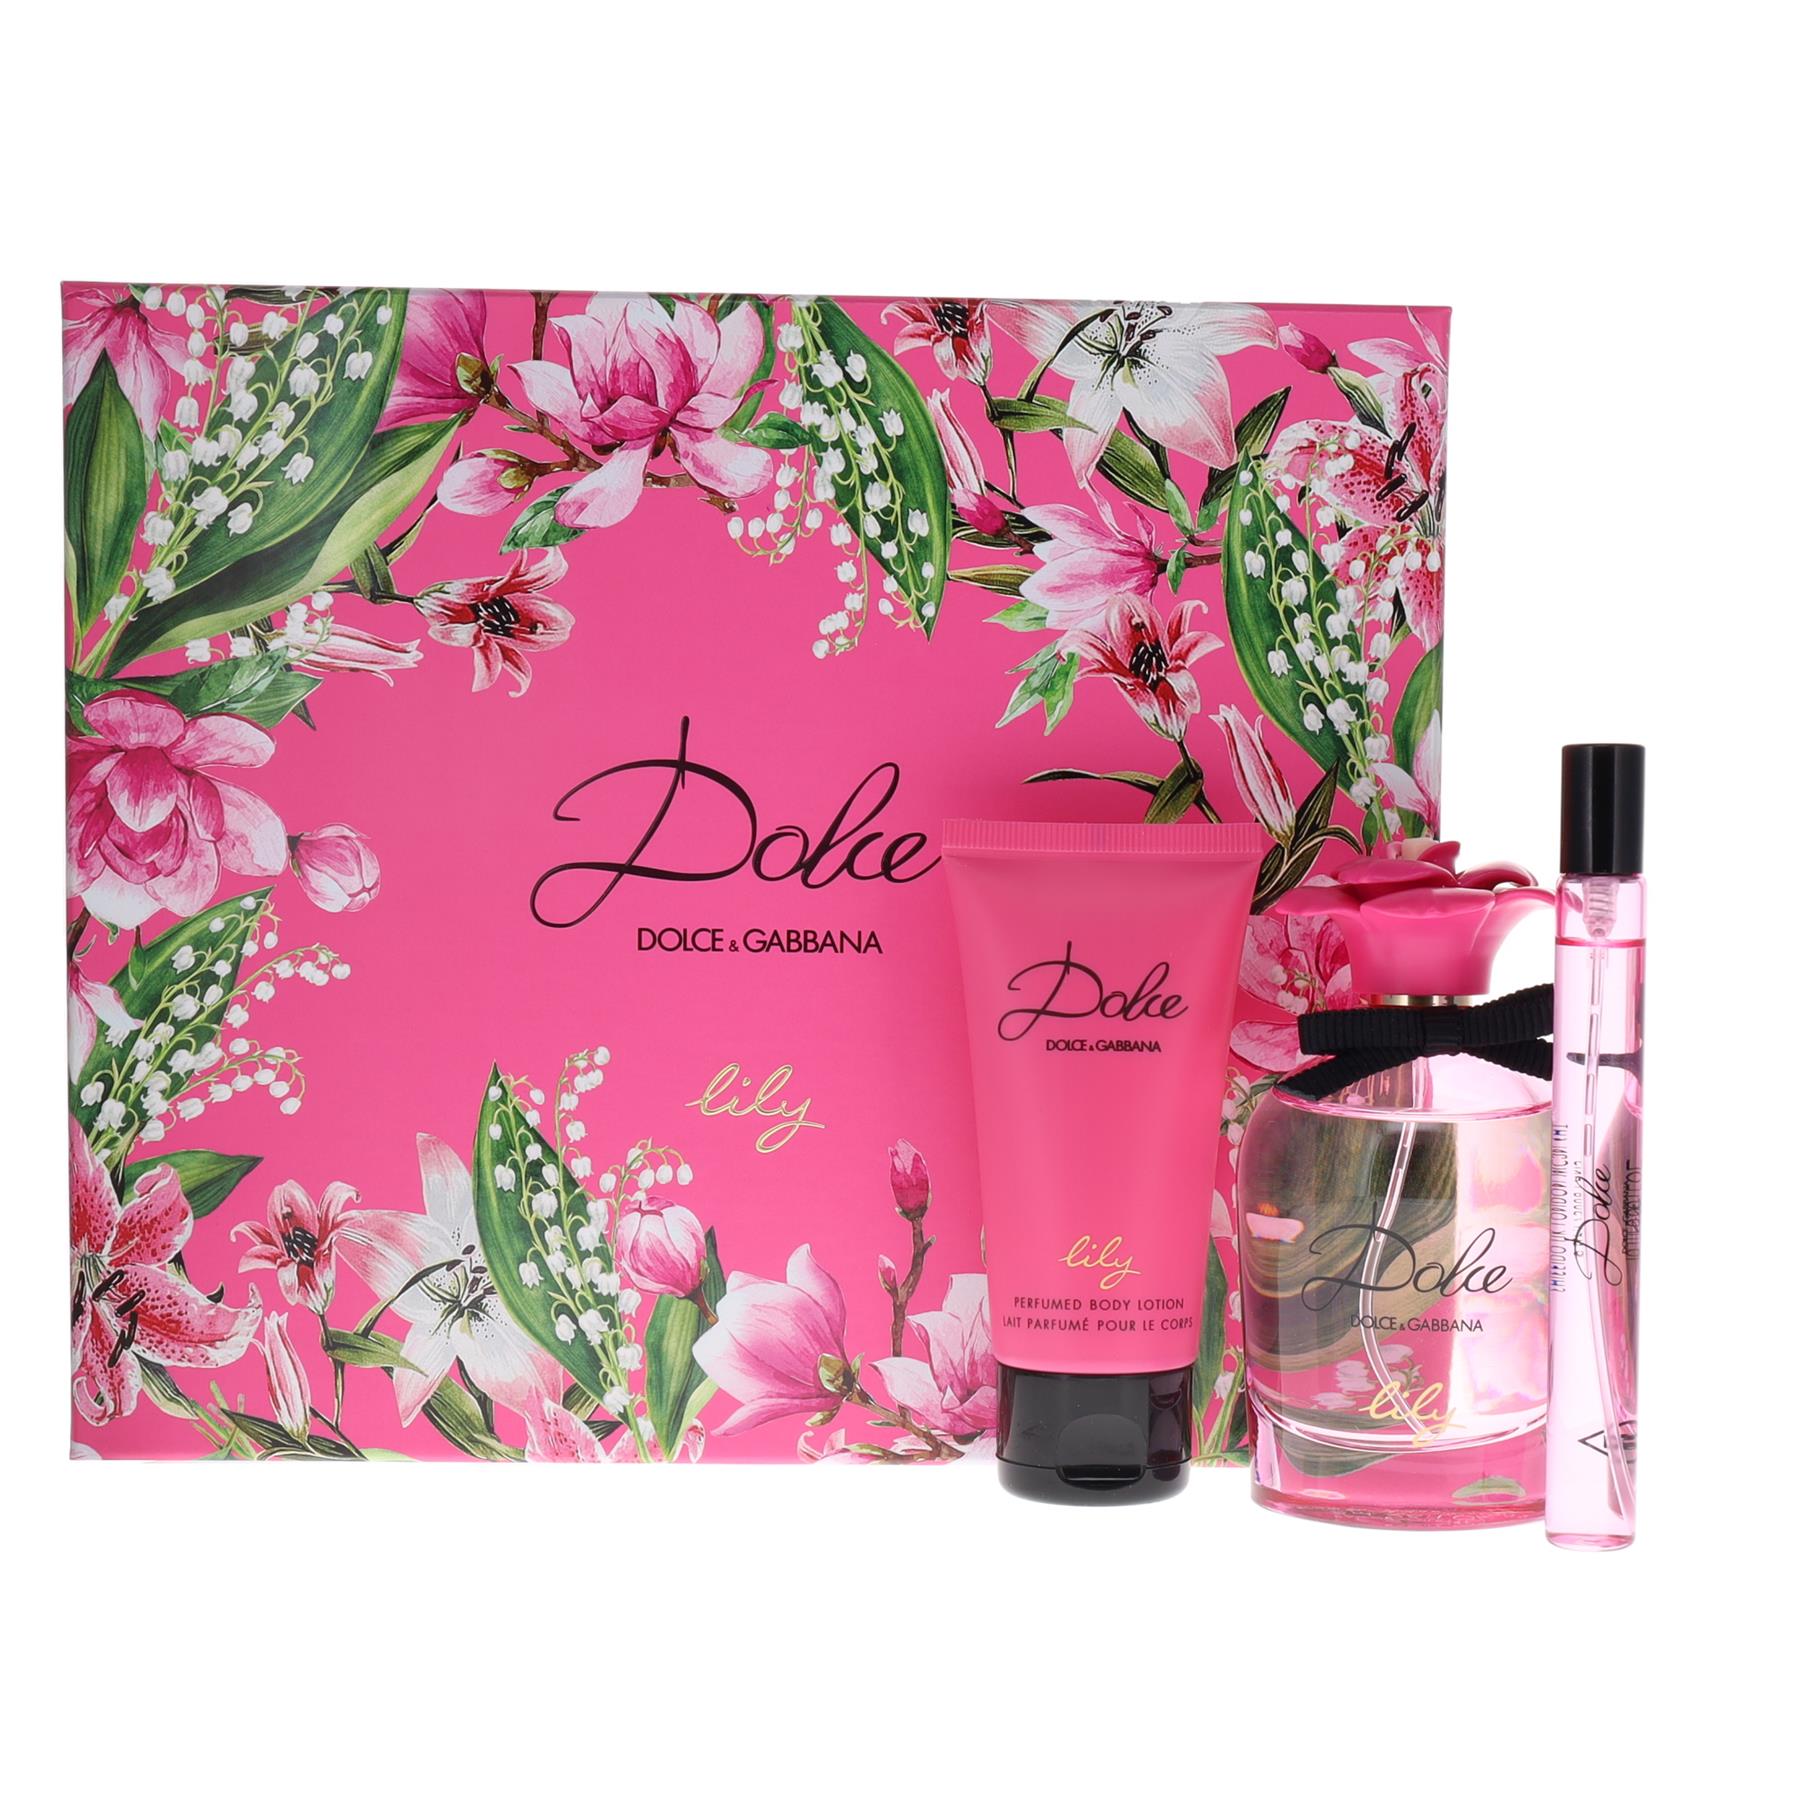 Dolce and Gabbana Dolce Lily 75ml Eau de Toilette Gift Set 50ml Body Lotion, 10ml Eau de Toilette for... from Perfume Plus Direct